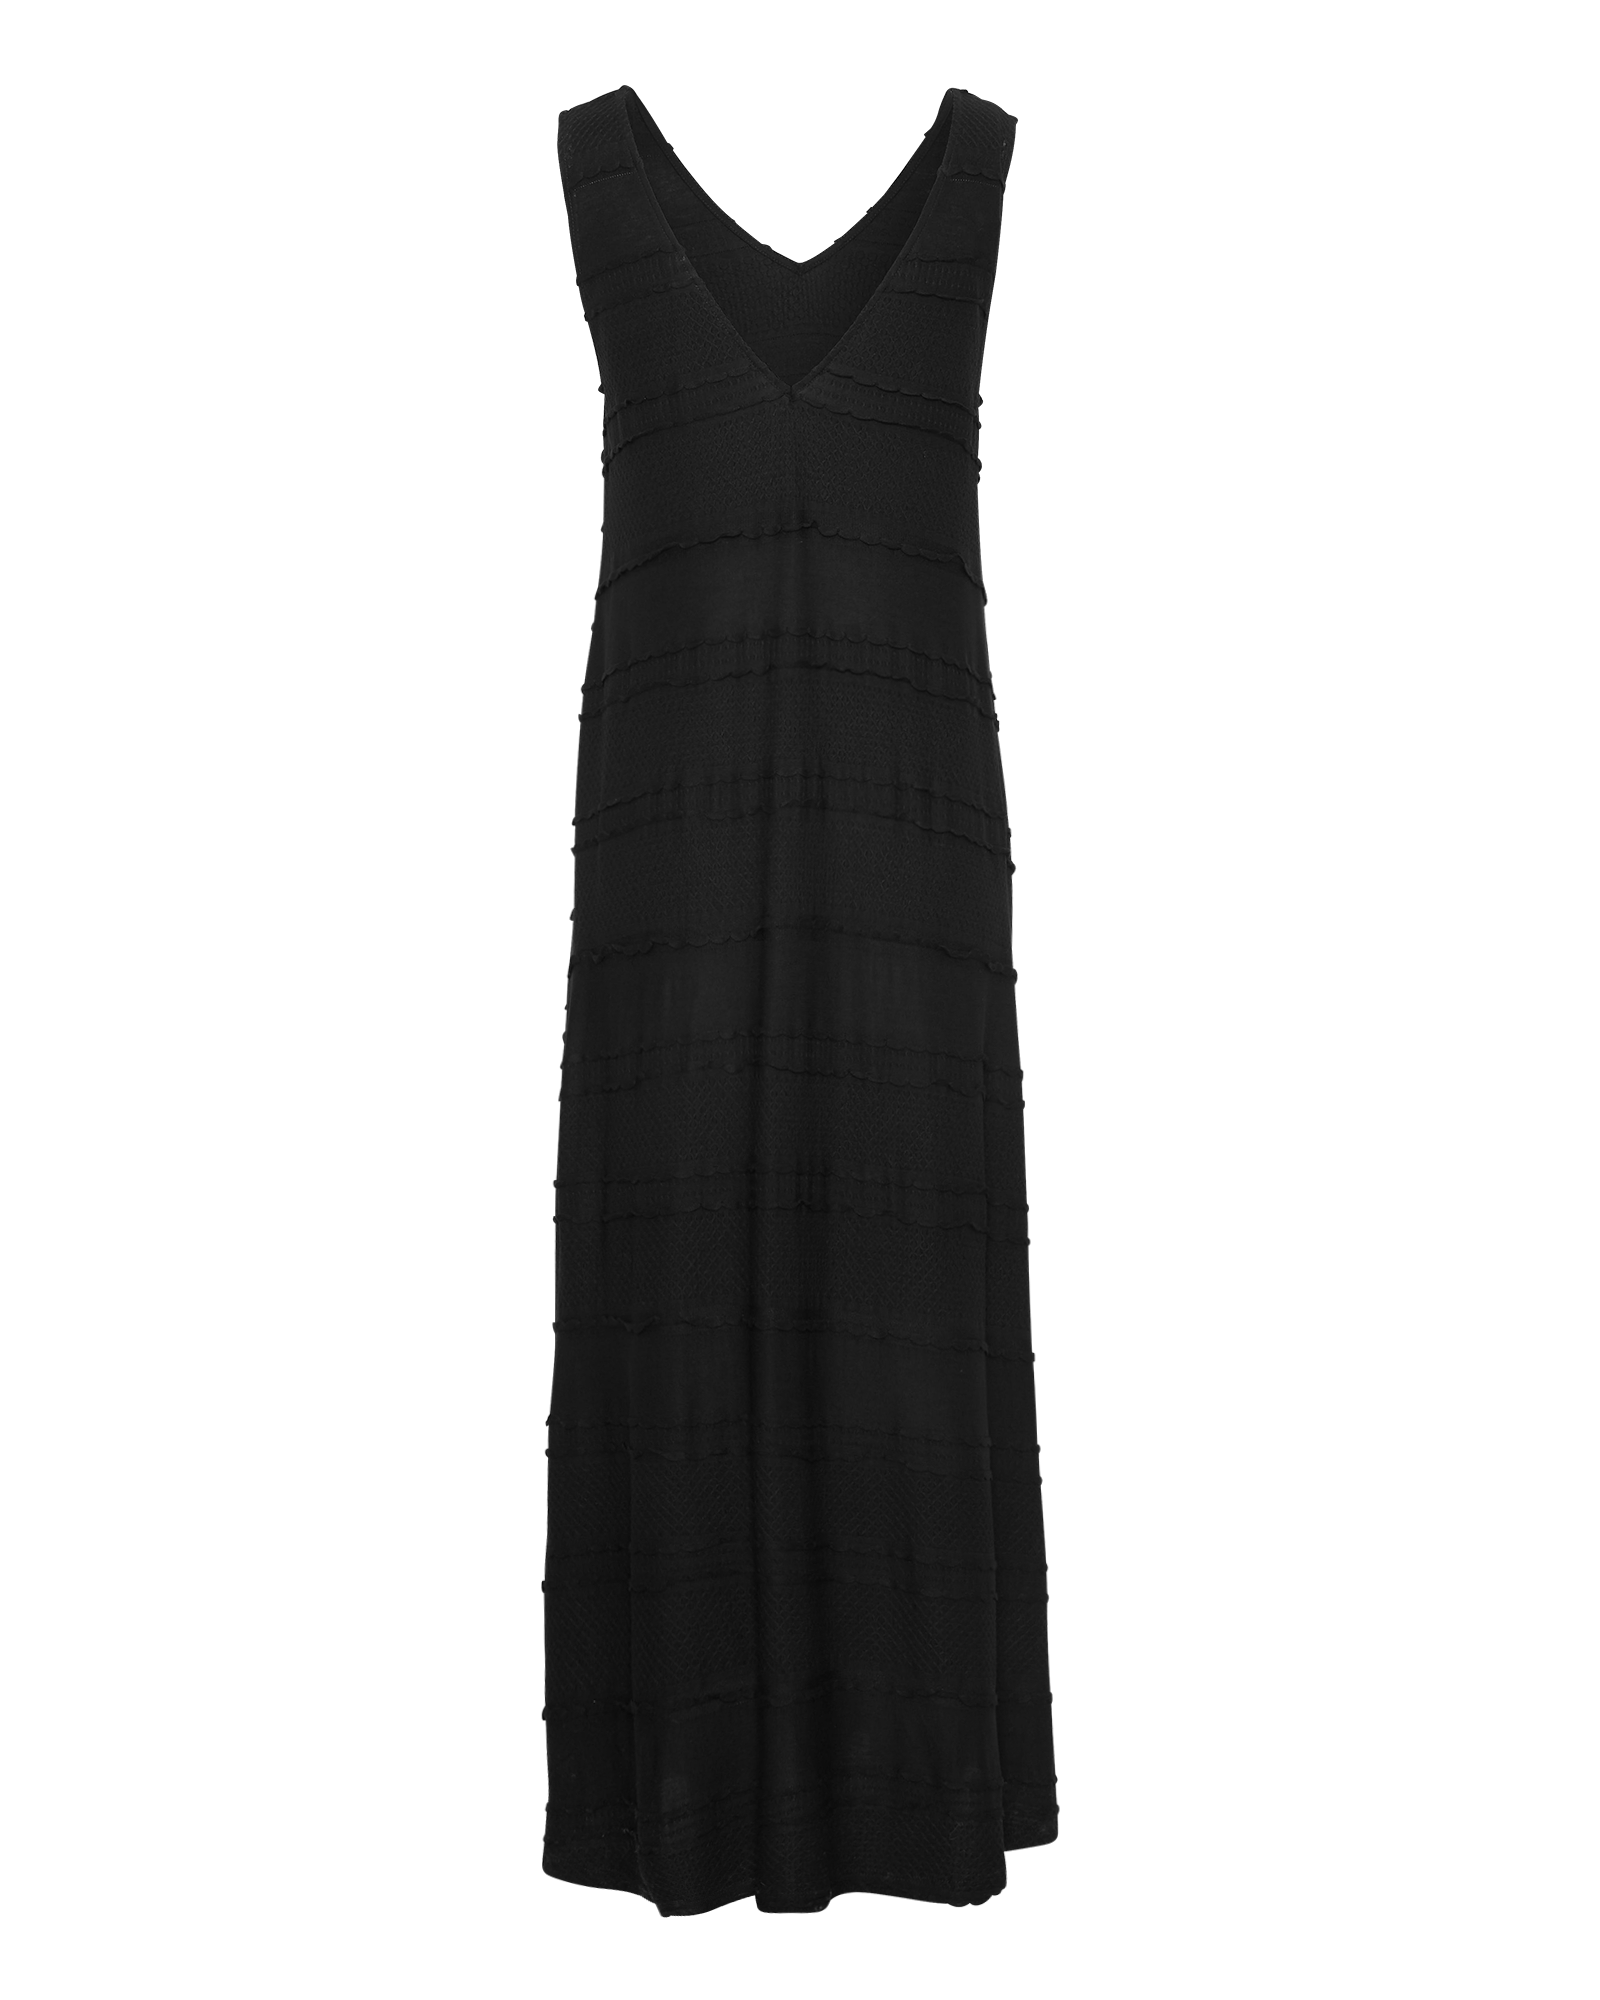 Nesma SL Dress_16471_2_Black